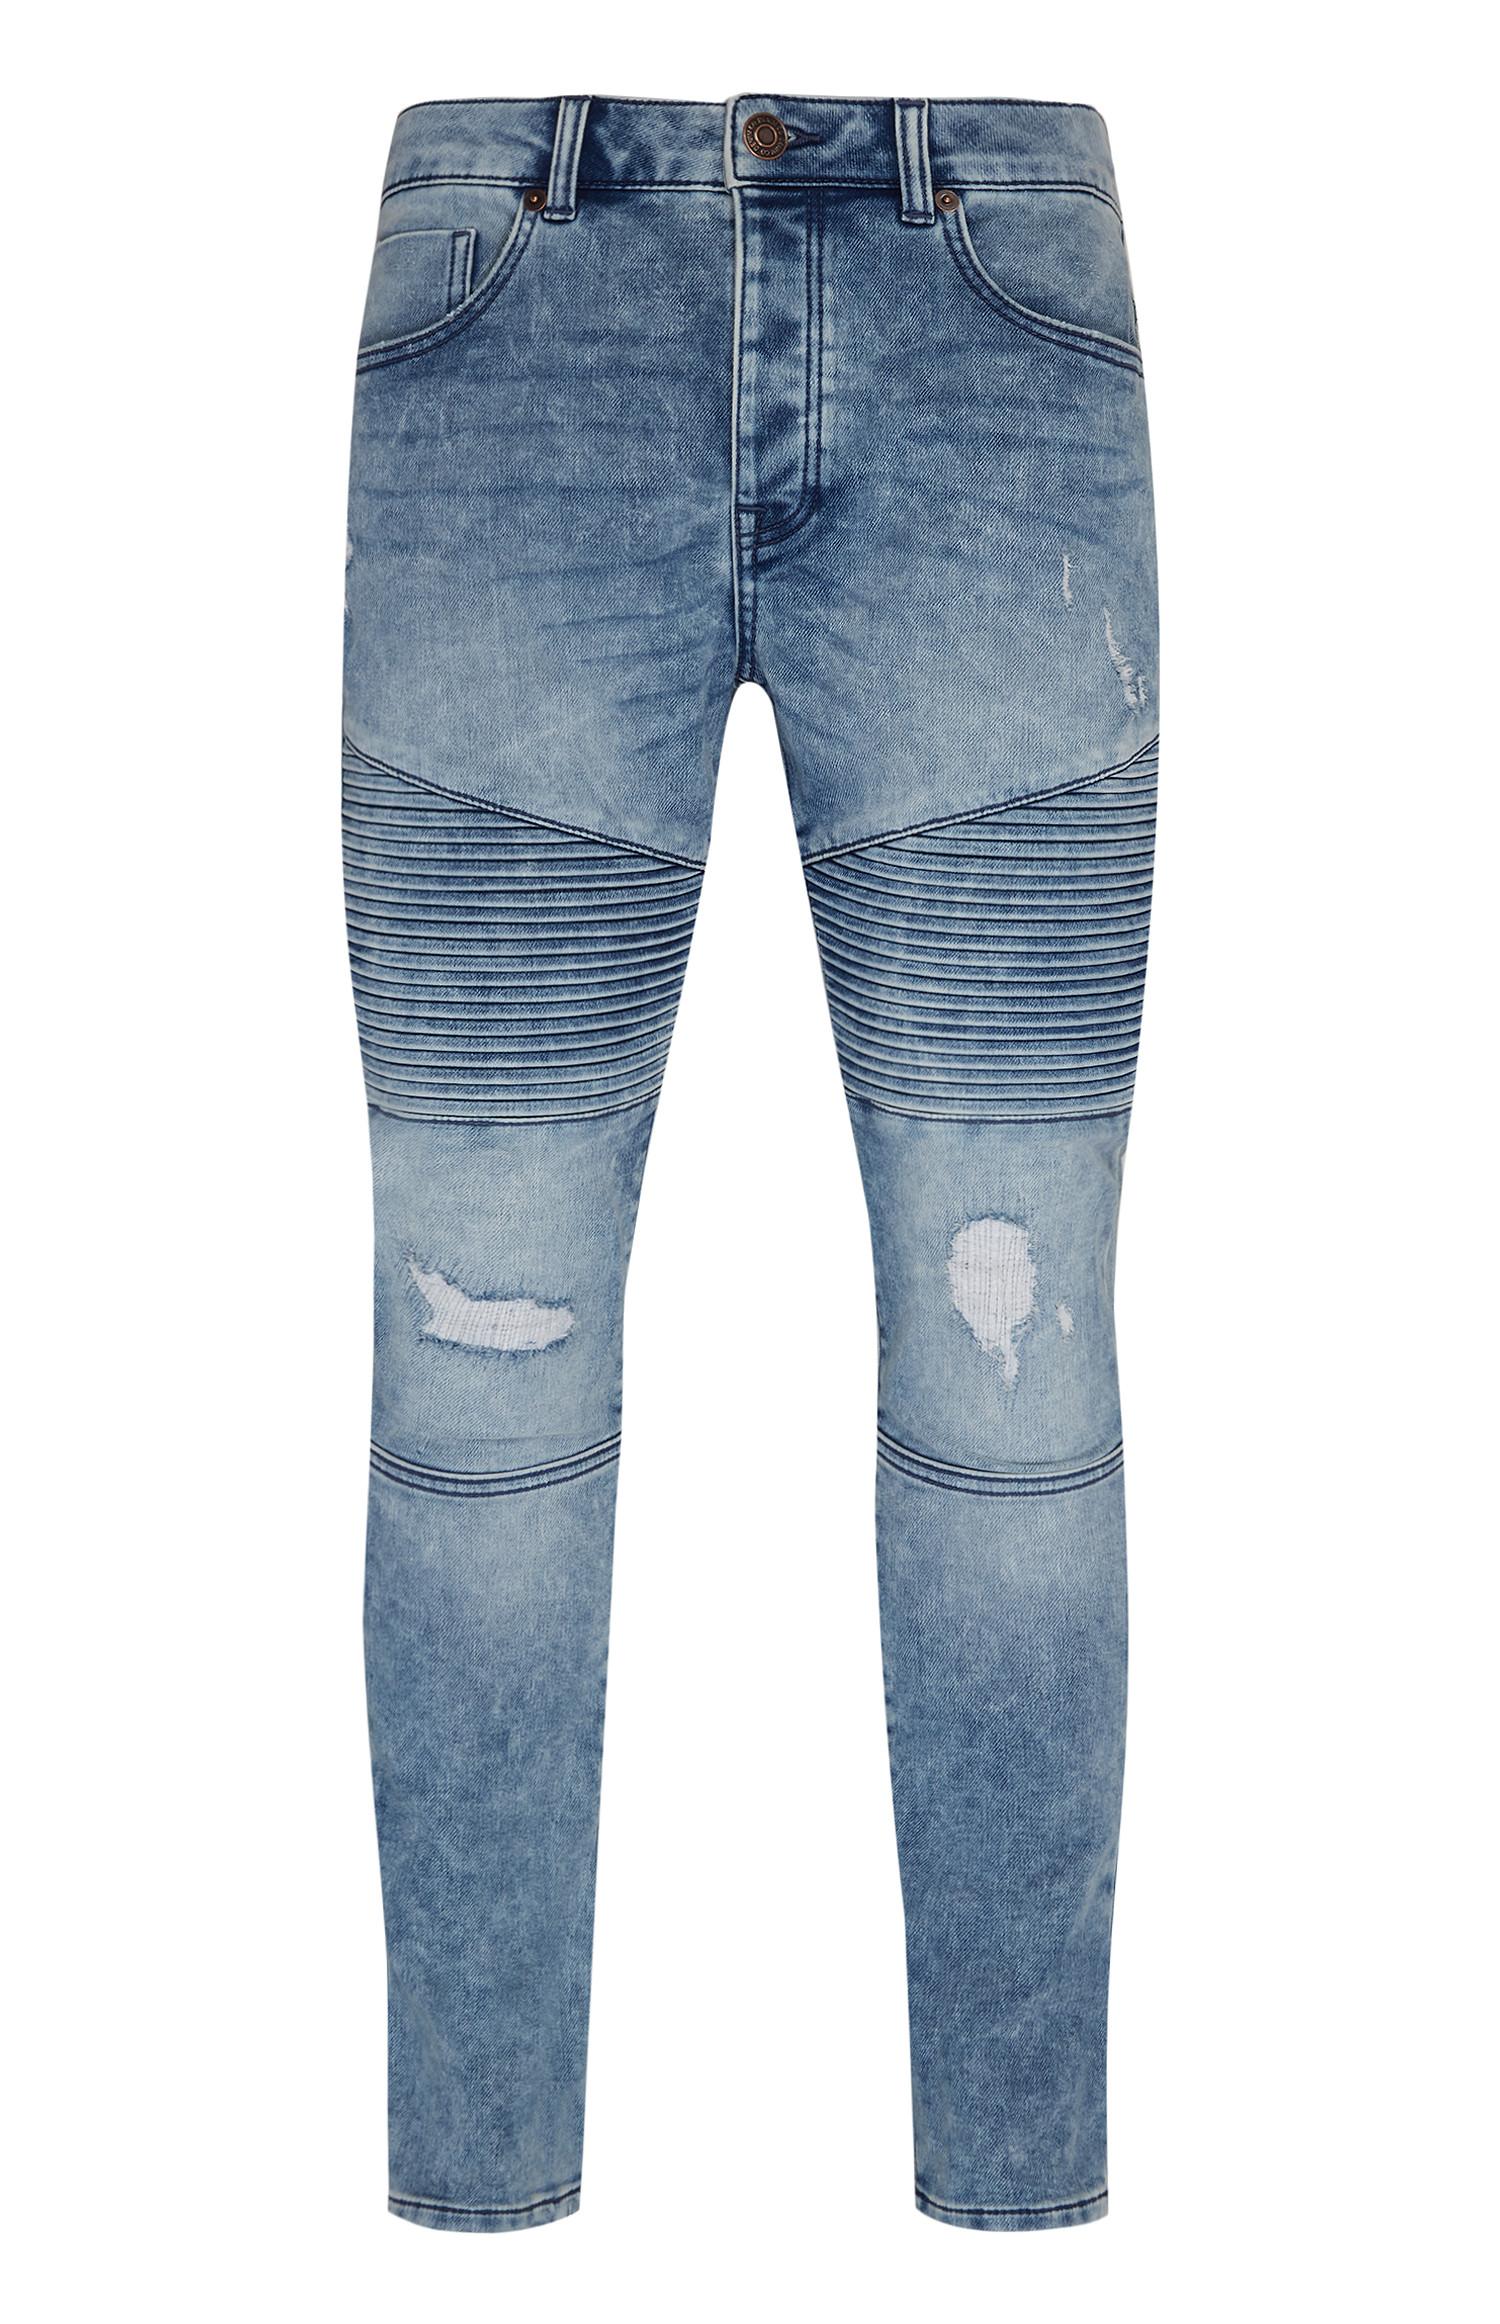 jeans jumpsuit primark